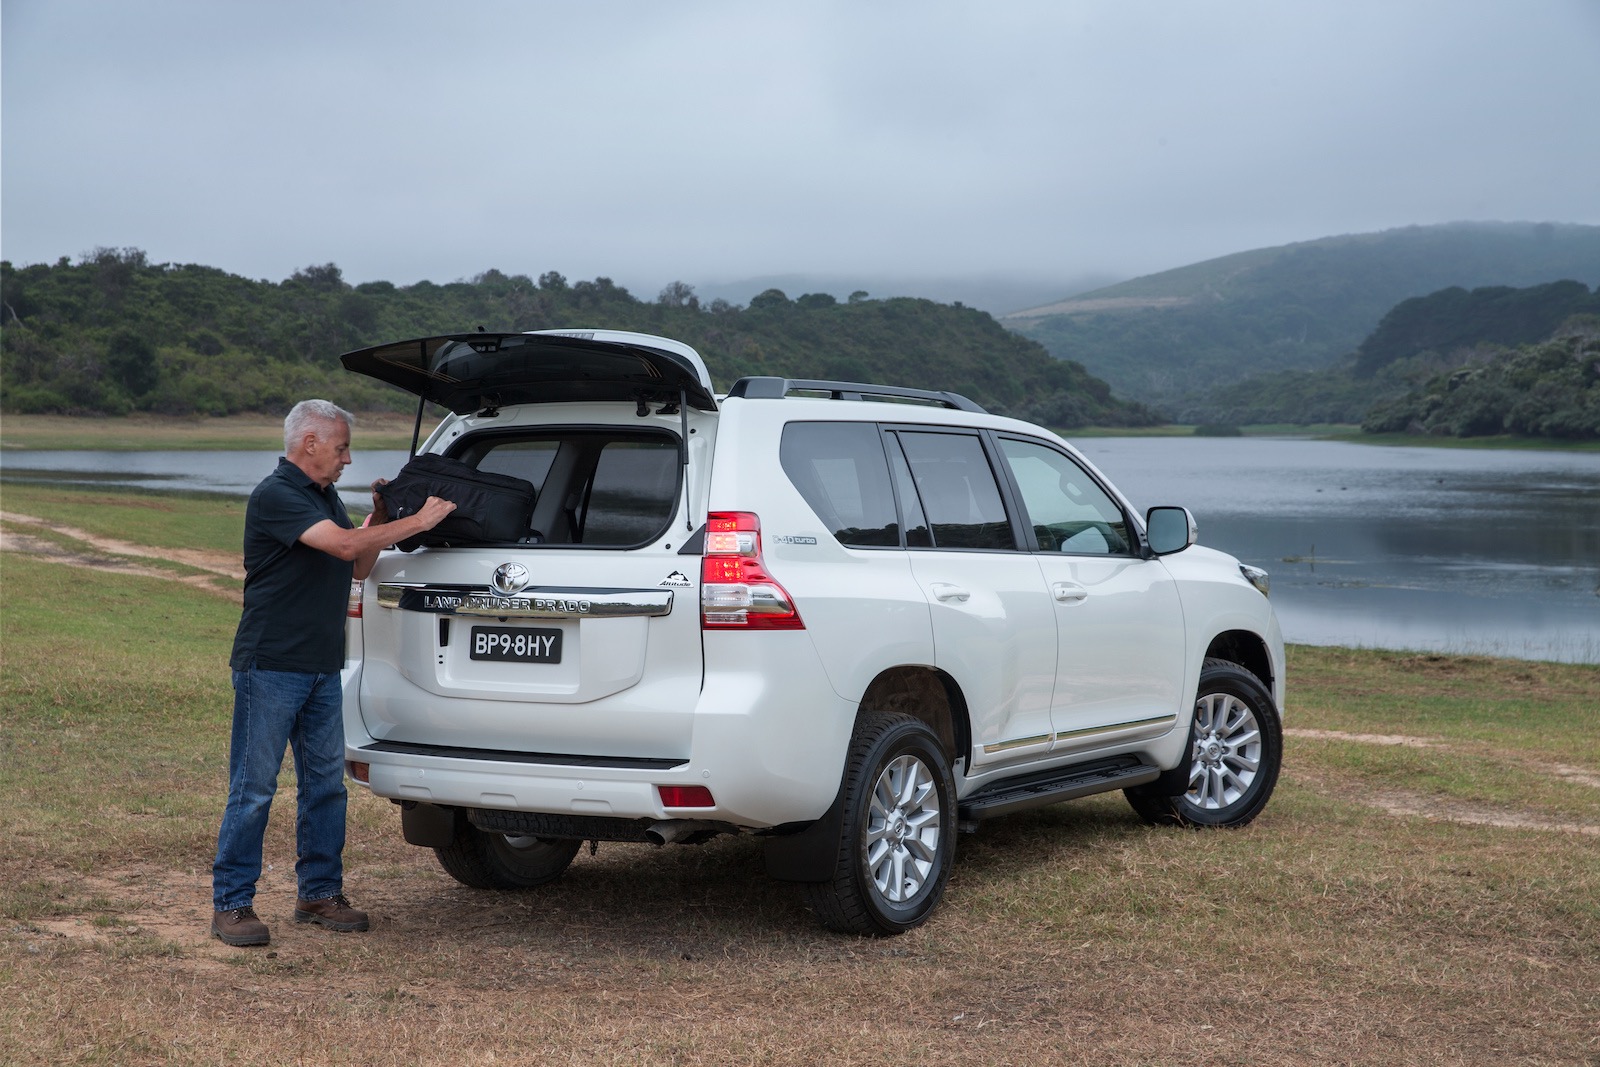 2017 Toyota Prado Altitude special edition on sale in Australia
PerformanceDrive